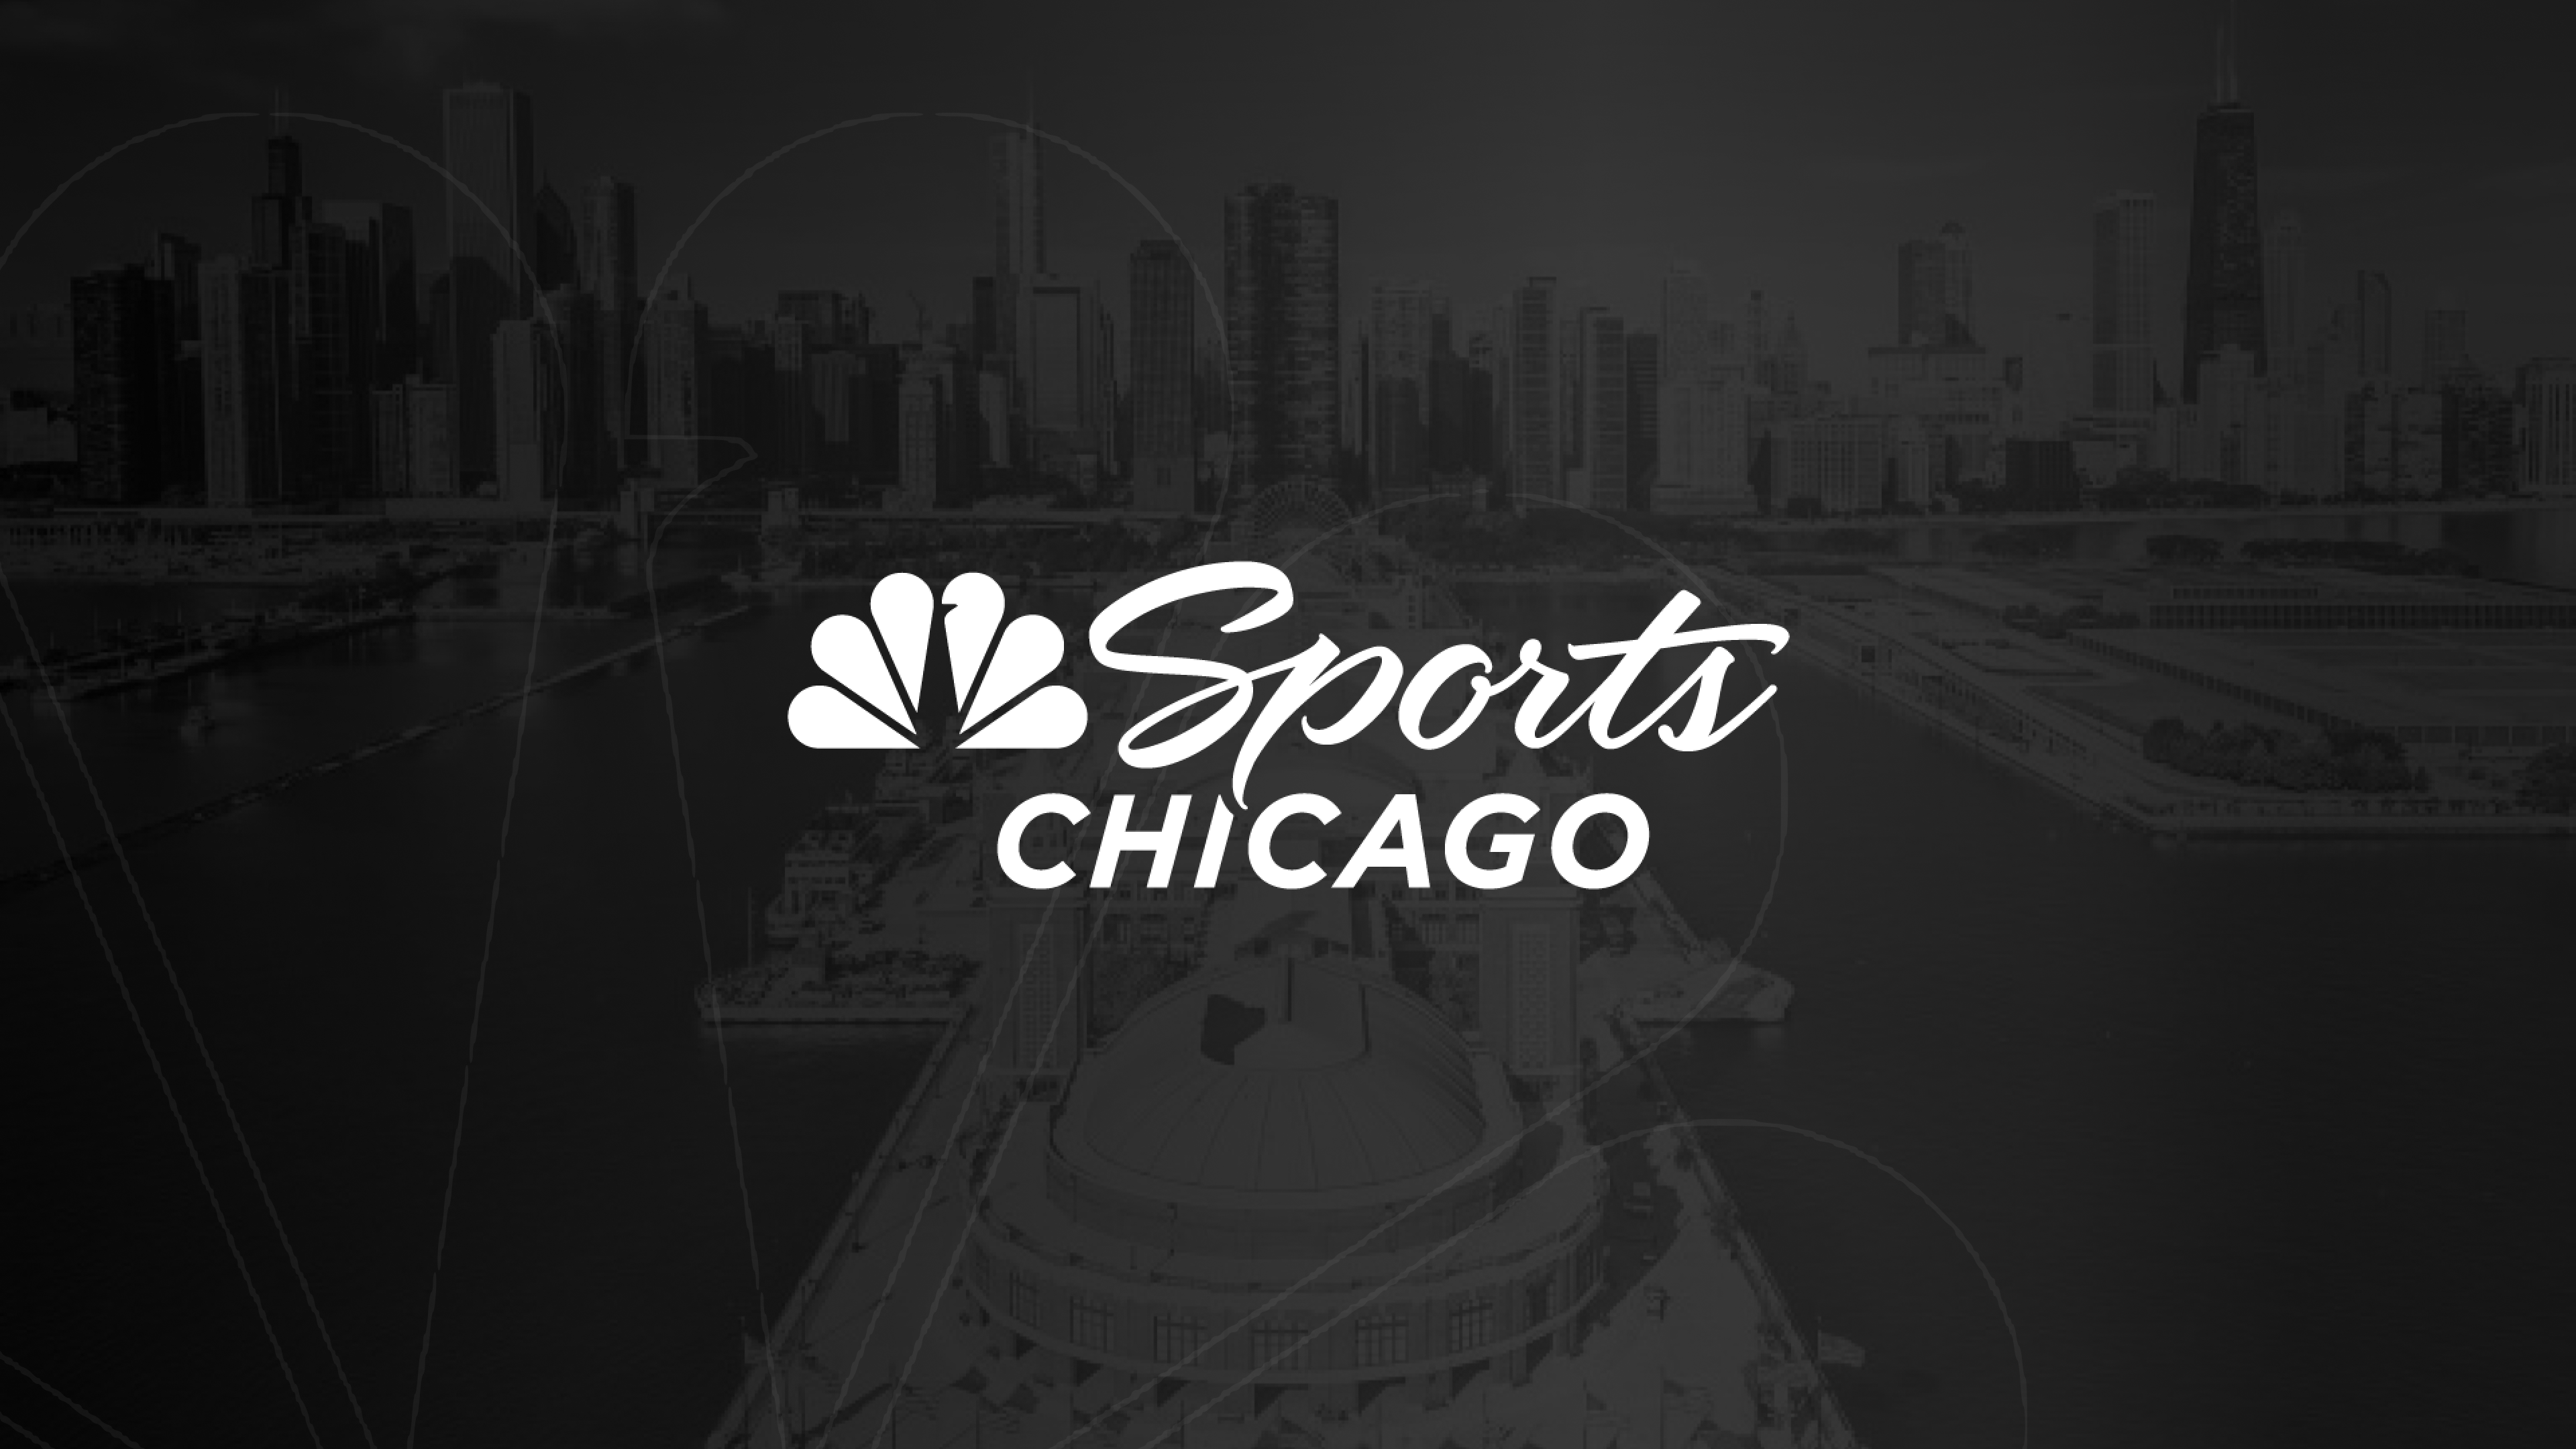 Chicago signs NCAA prospect Trevor van Riemsdyk - NBC Sports